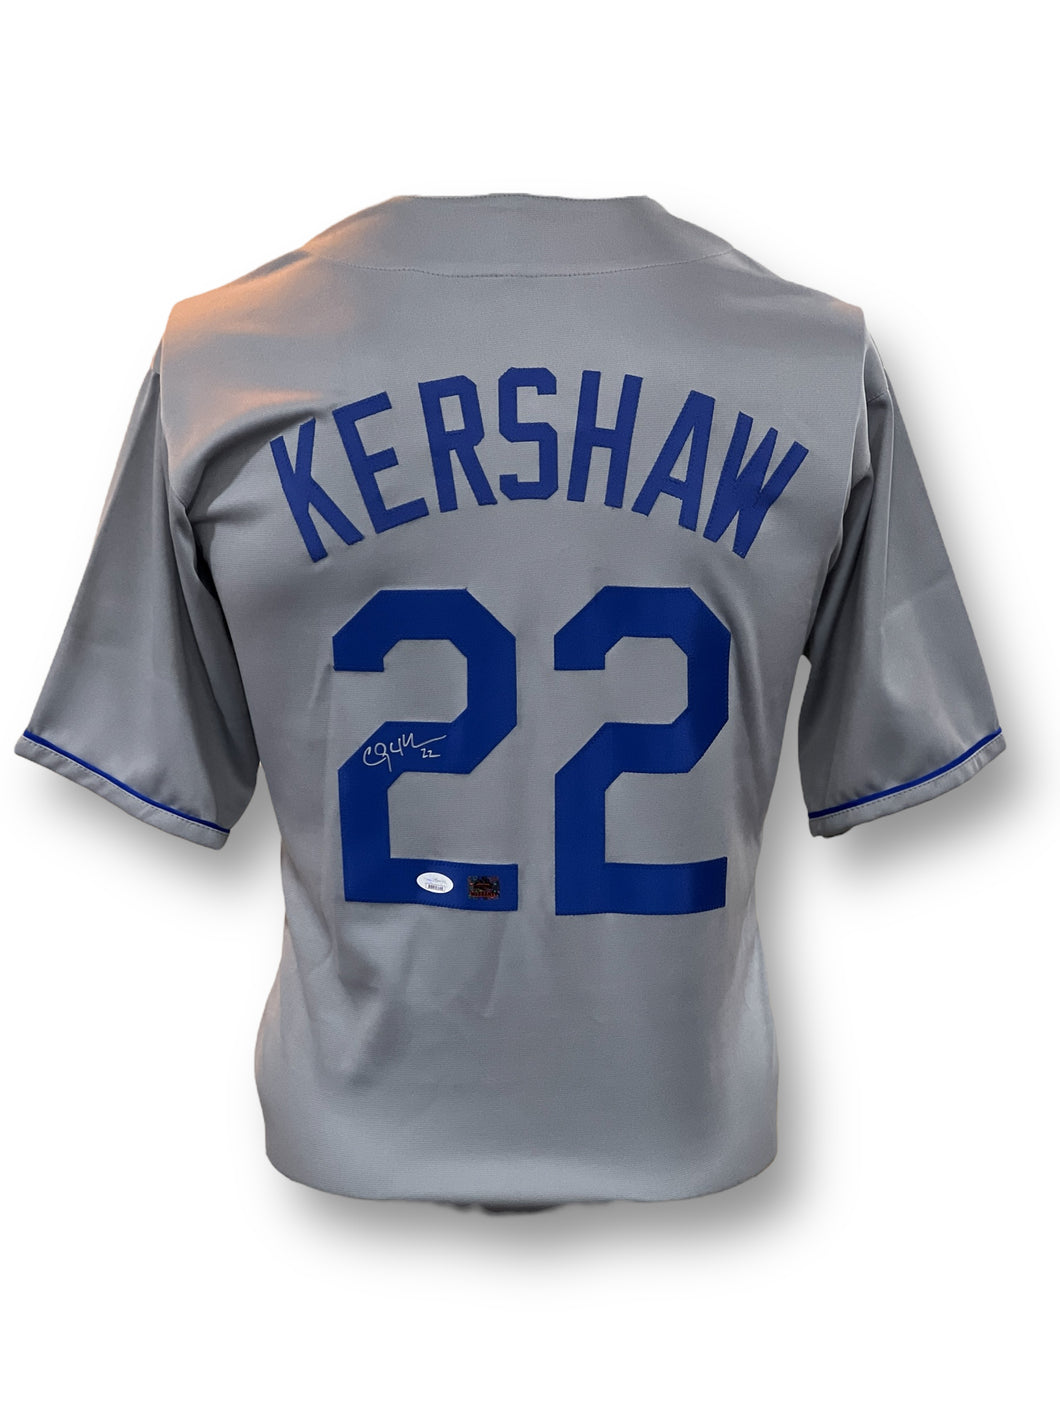 Jersey / Dodgers / Clayton Kershaw